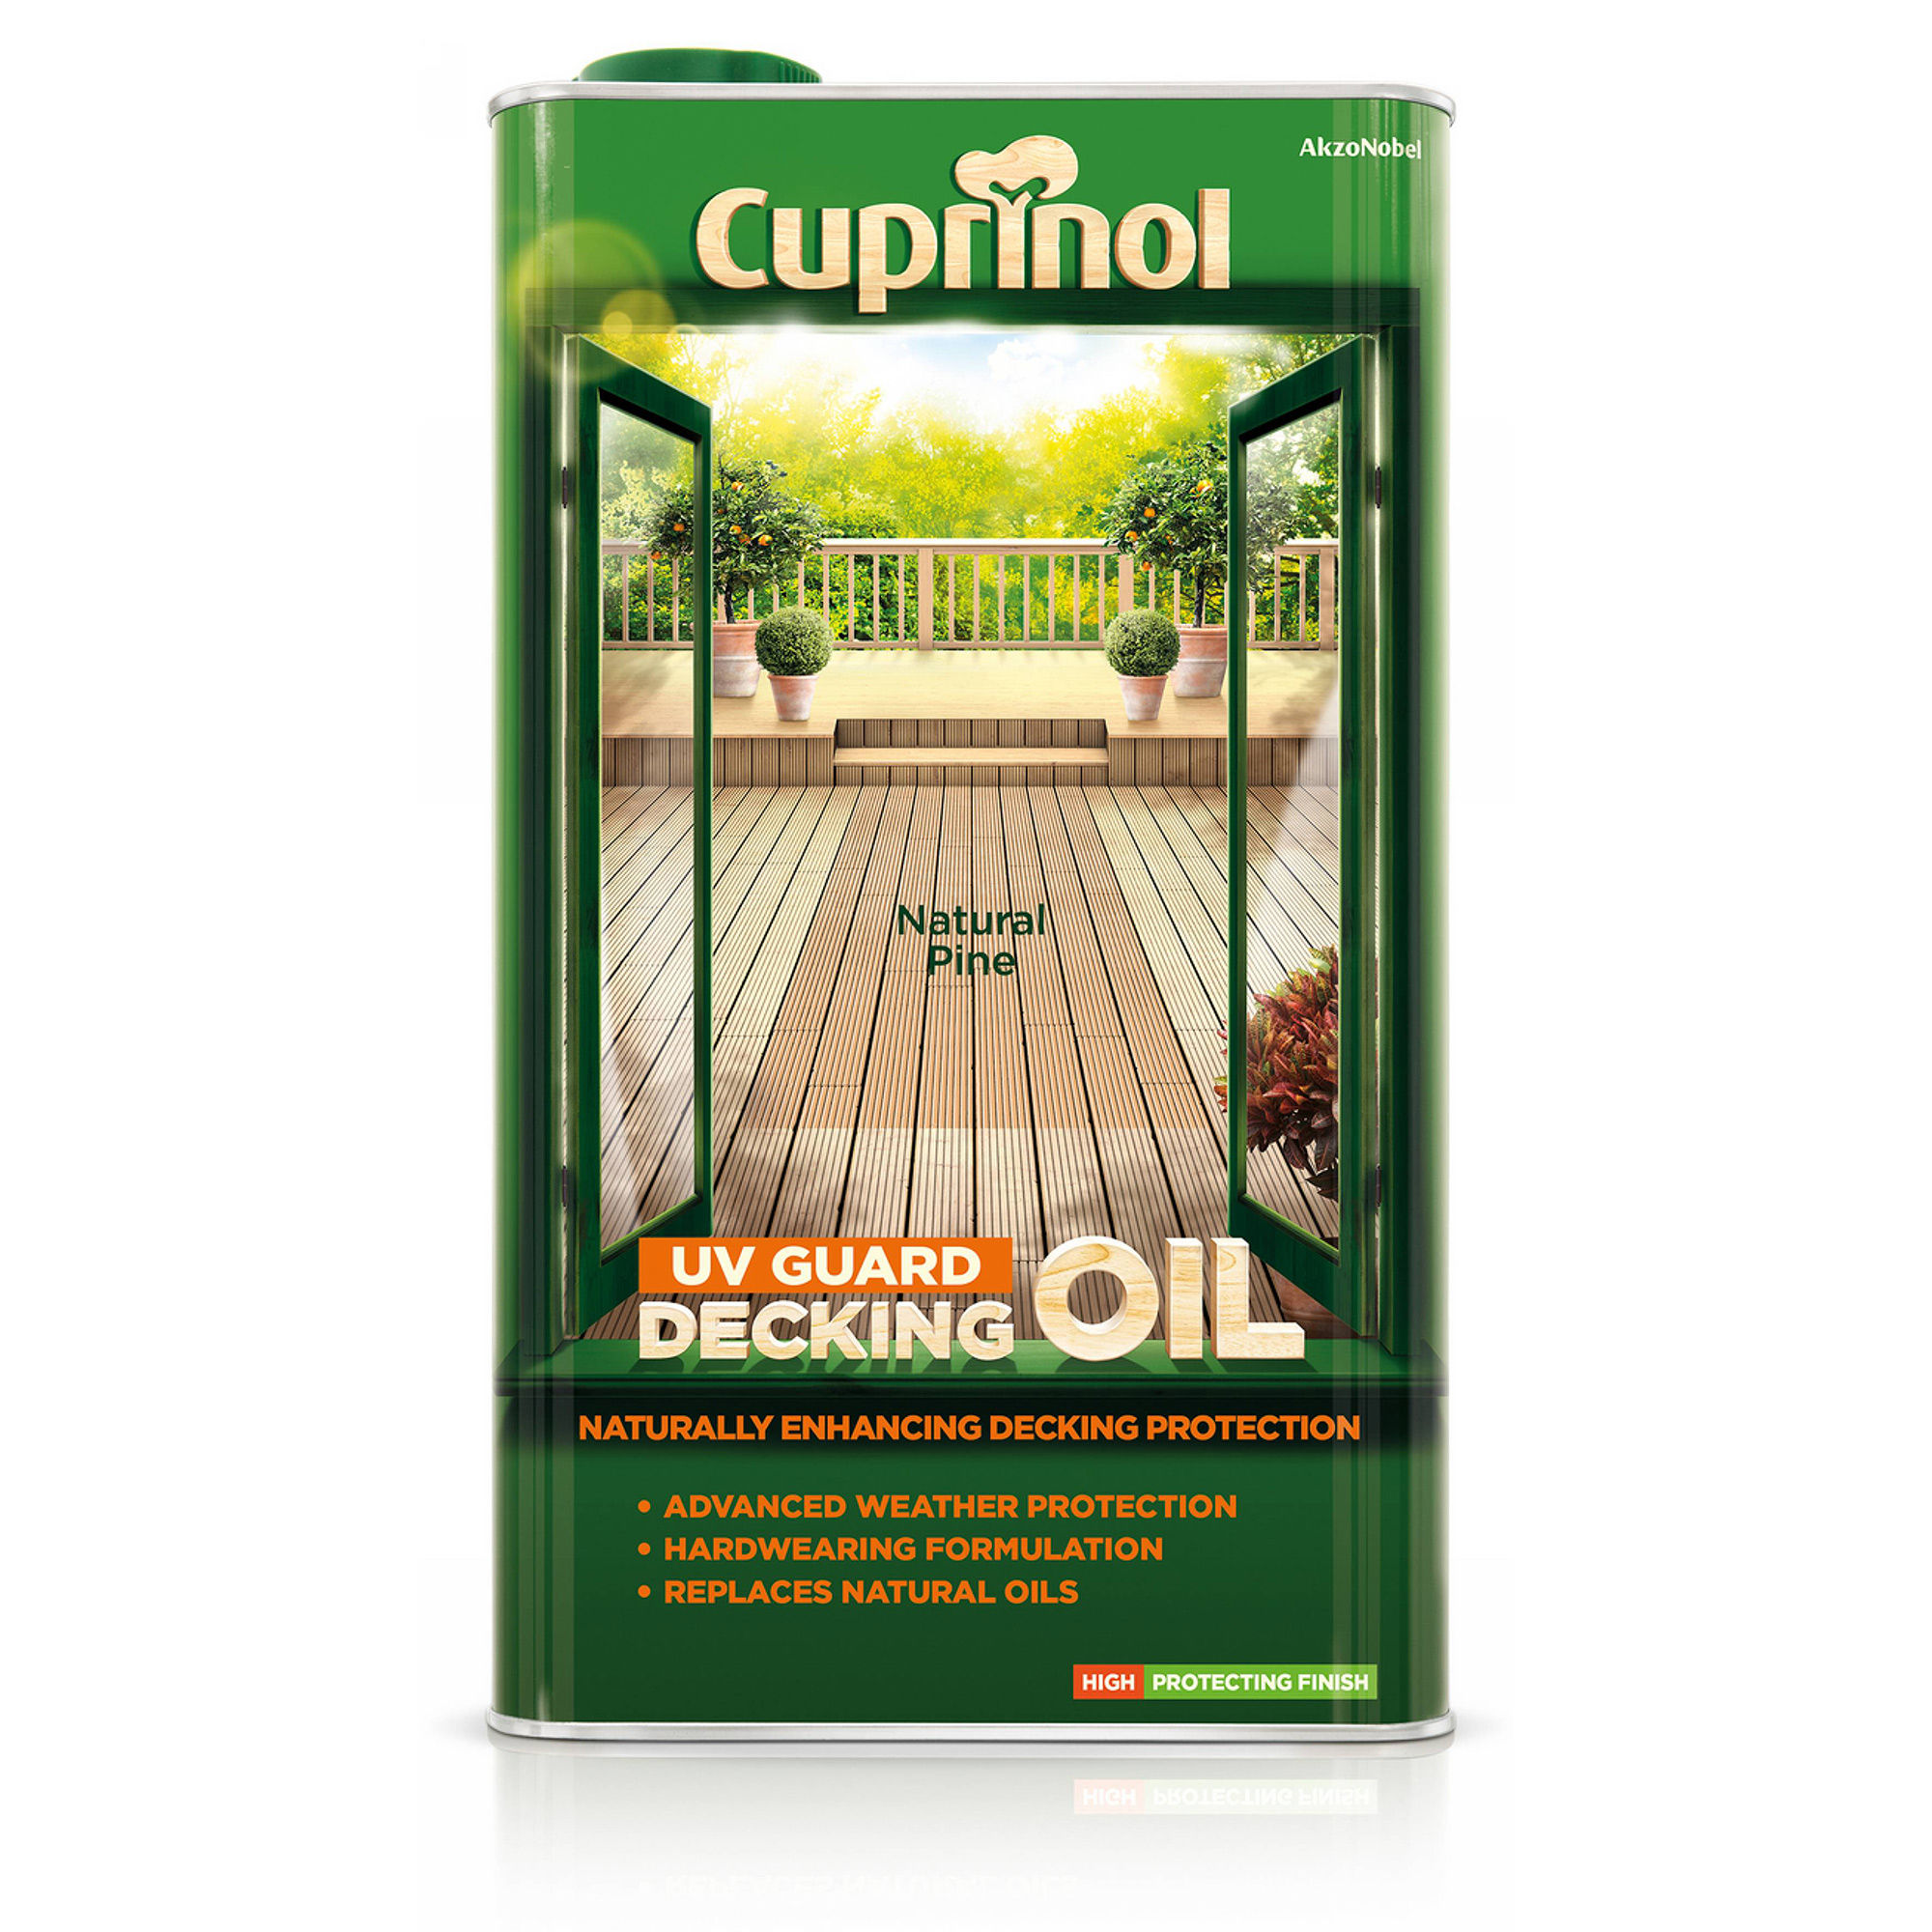 Cuprinol UV Guard Decking Oil 5 - Natural Pine (5L)